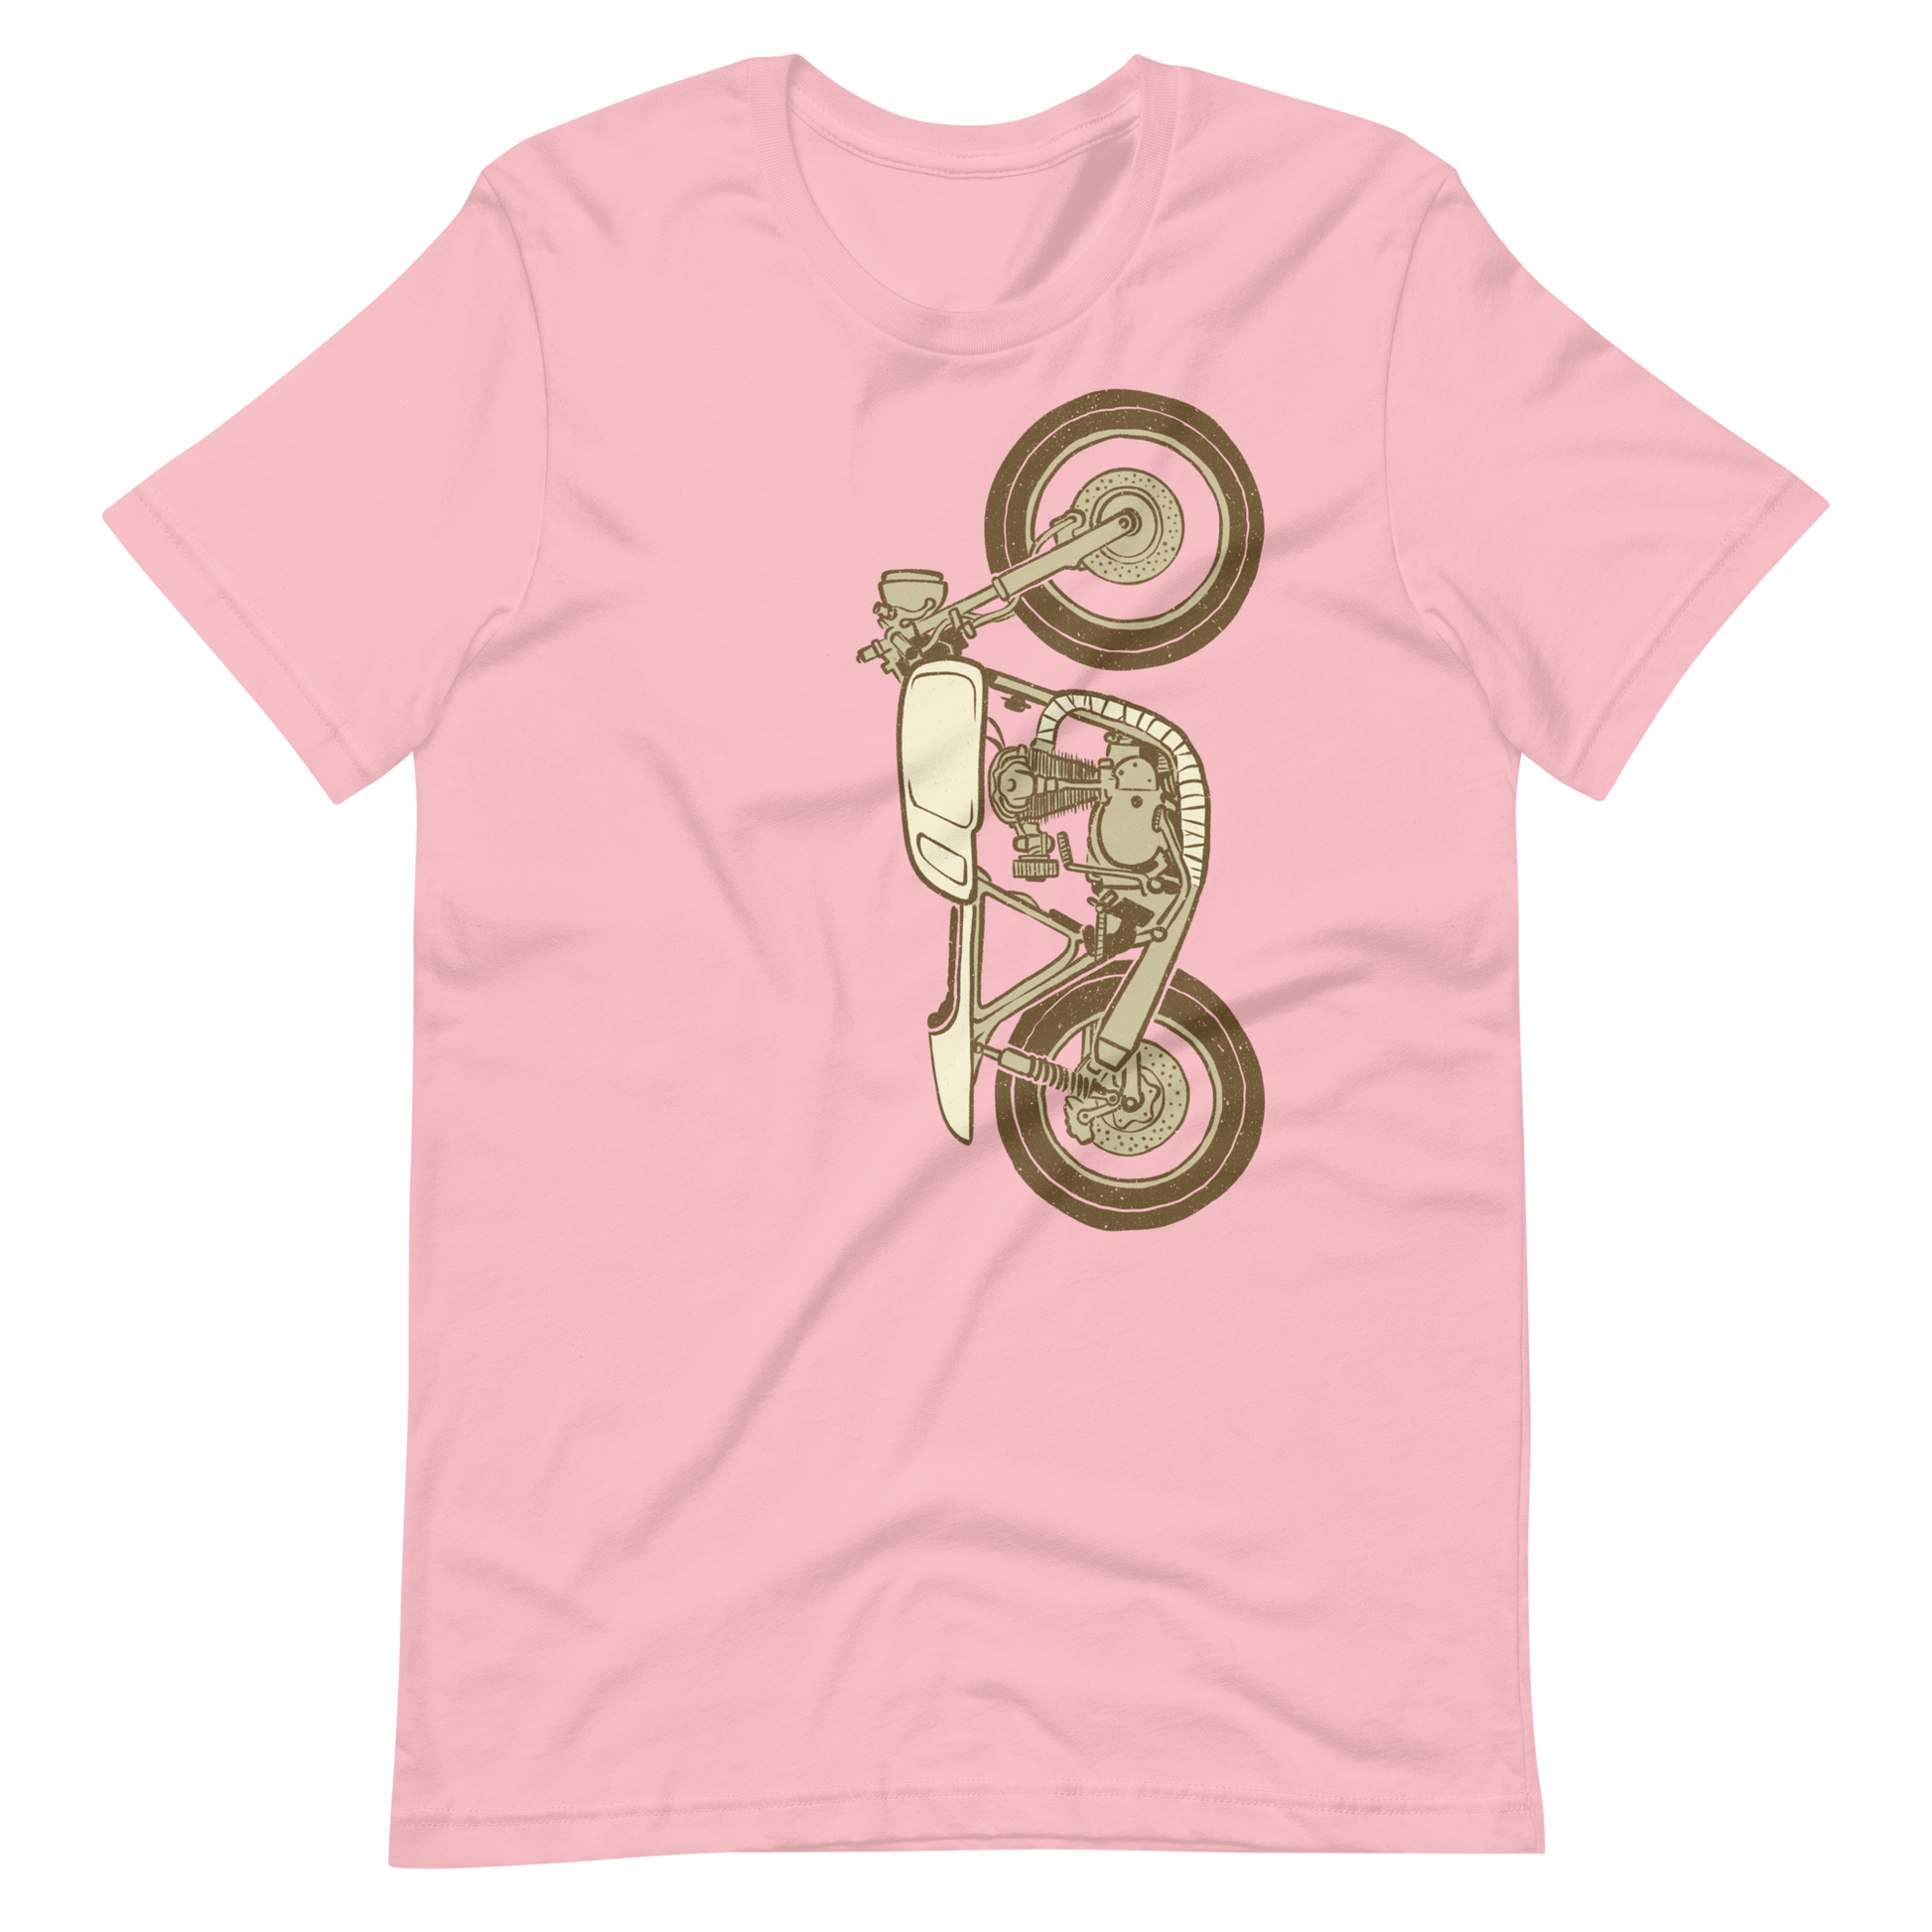 Pink Cafe Racer Tshirt Race Biker Shirt Motorbike Cool Gift For Him Coffee Lover Biker Shirt Motorcycle Rider Shirt Road Trip Journey Shirt